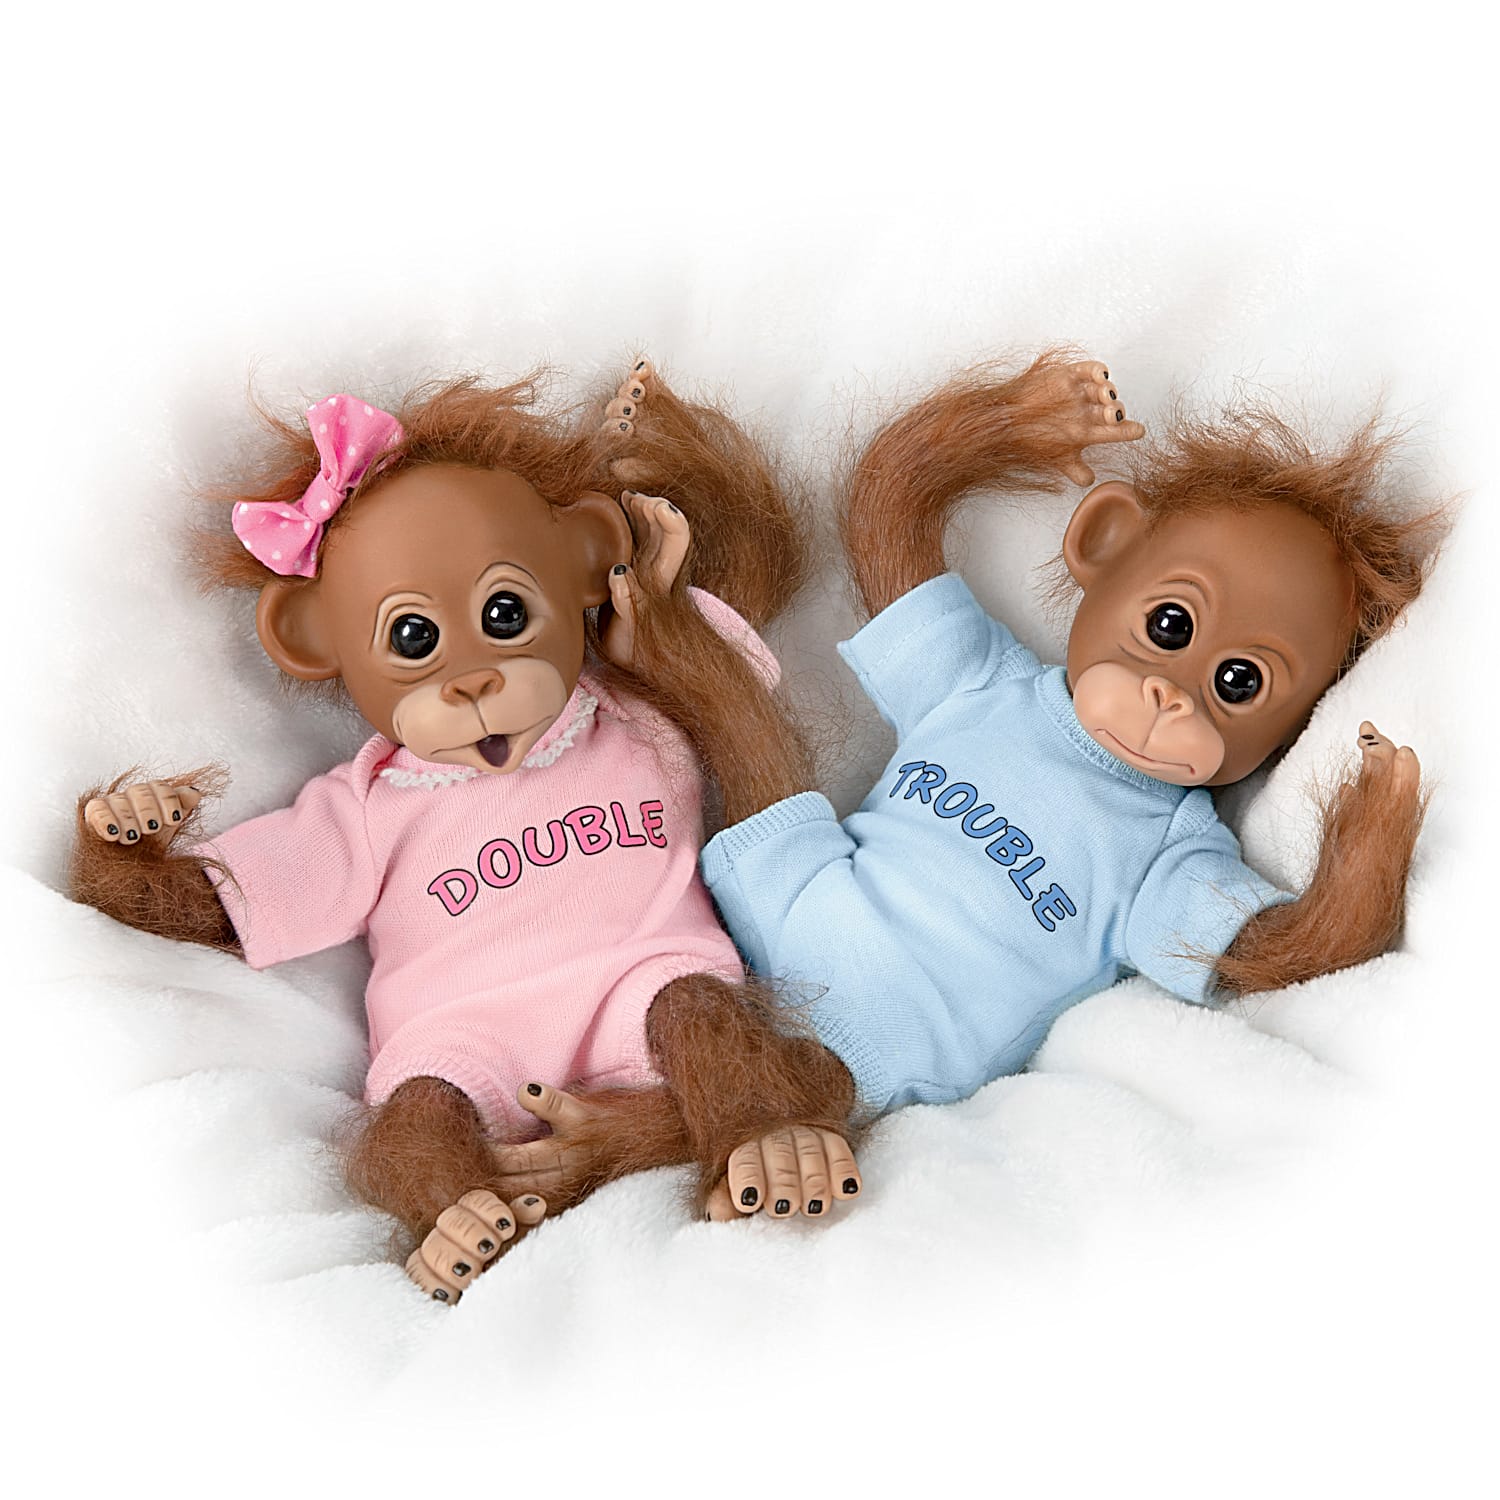 Monkey Baby Doll Set: Double Trouble